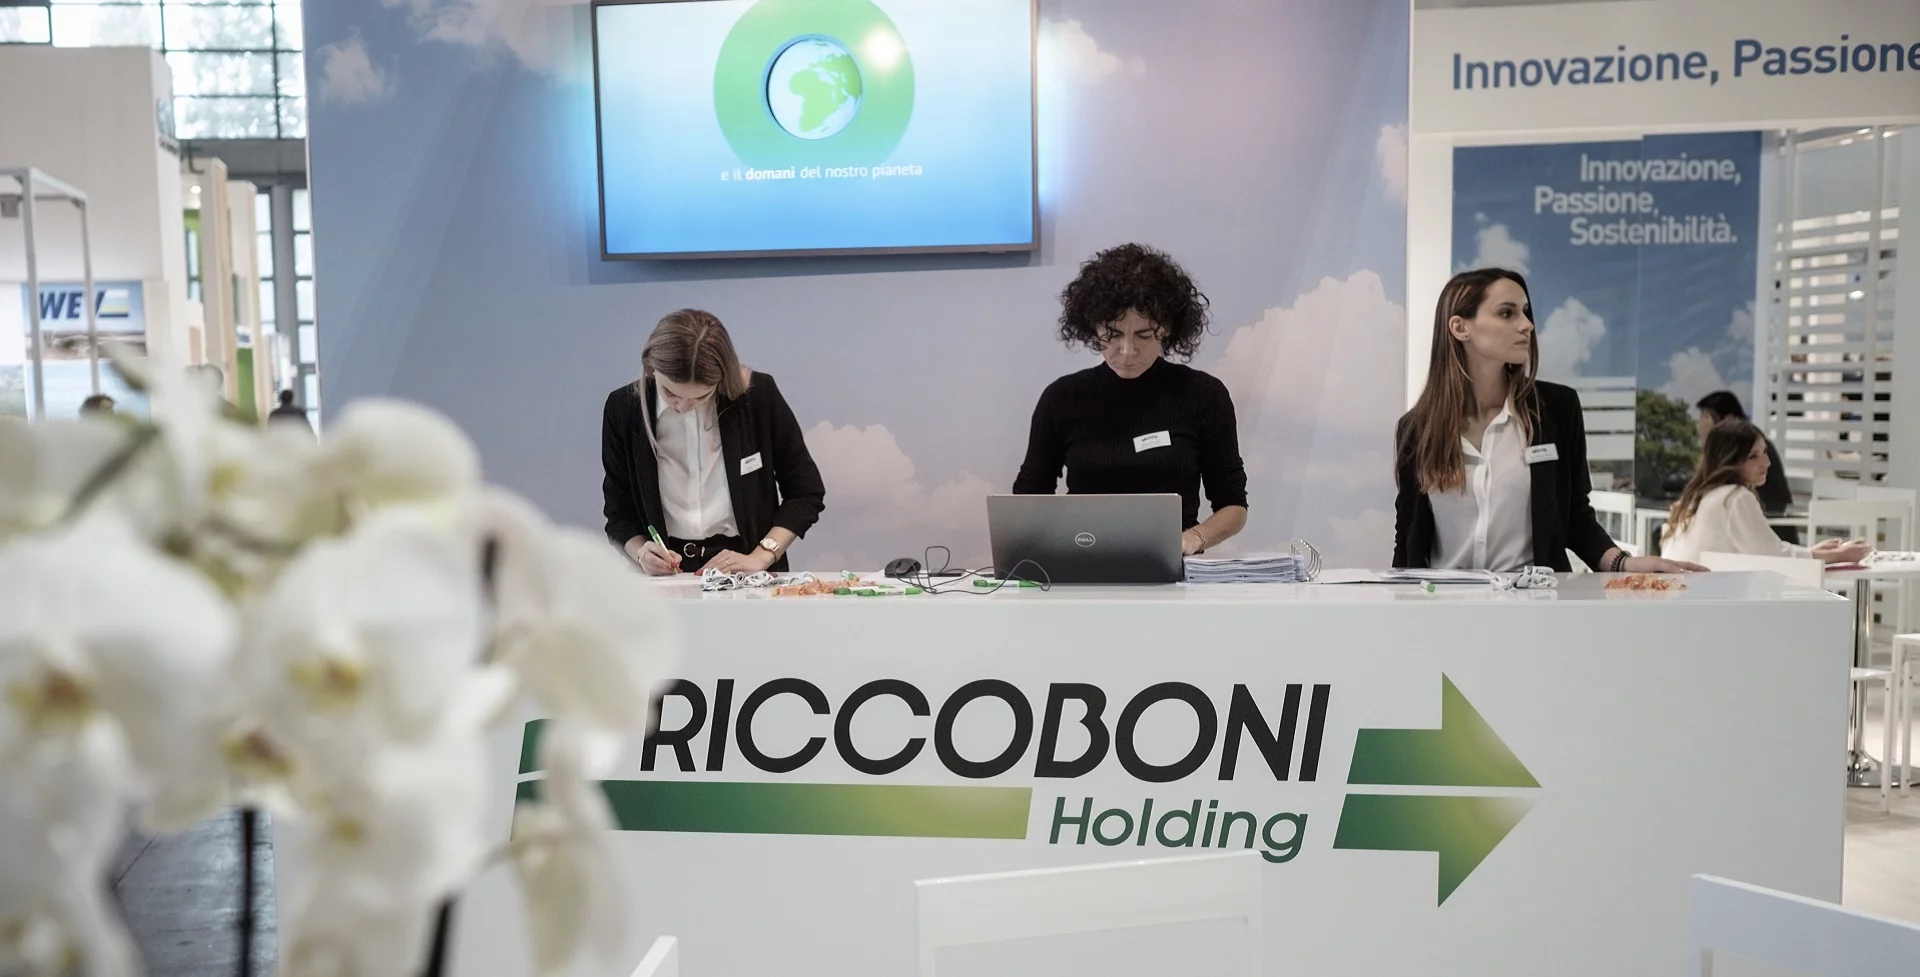 RICCOBONI HOLDING AT ECOMONDO 2022